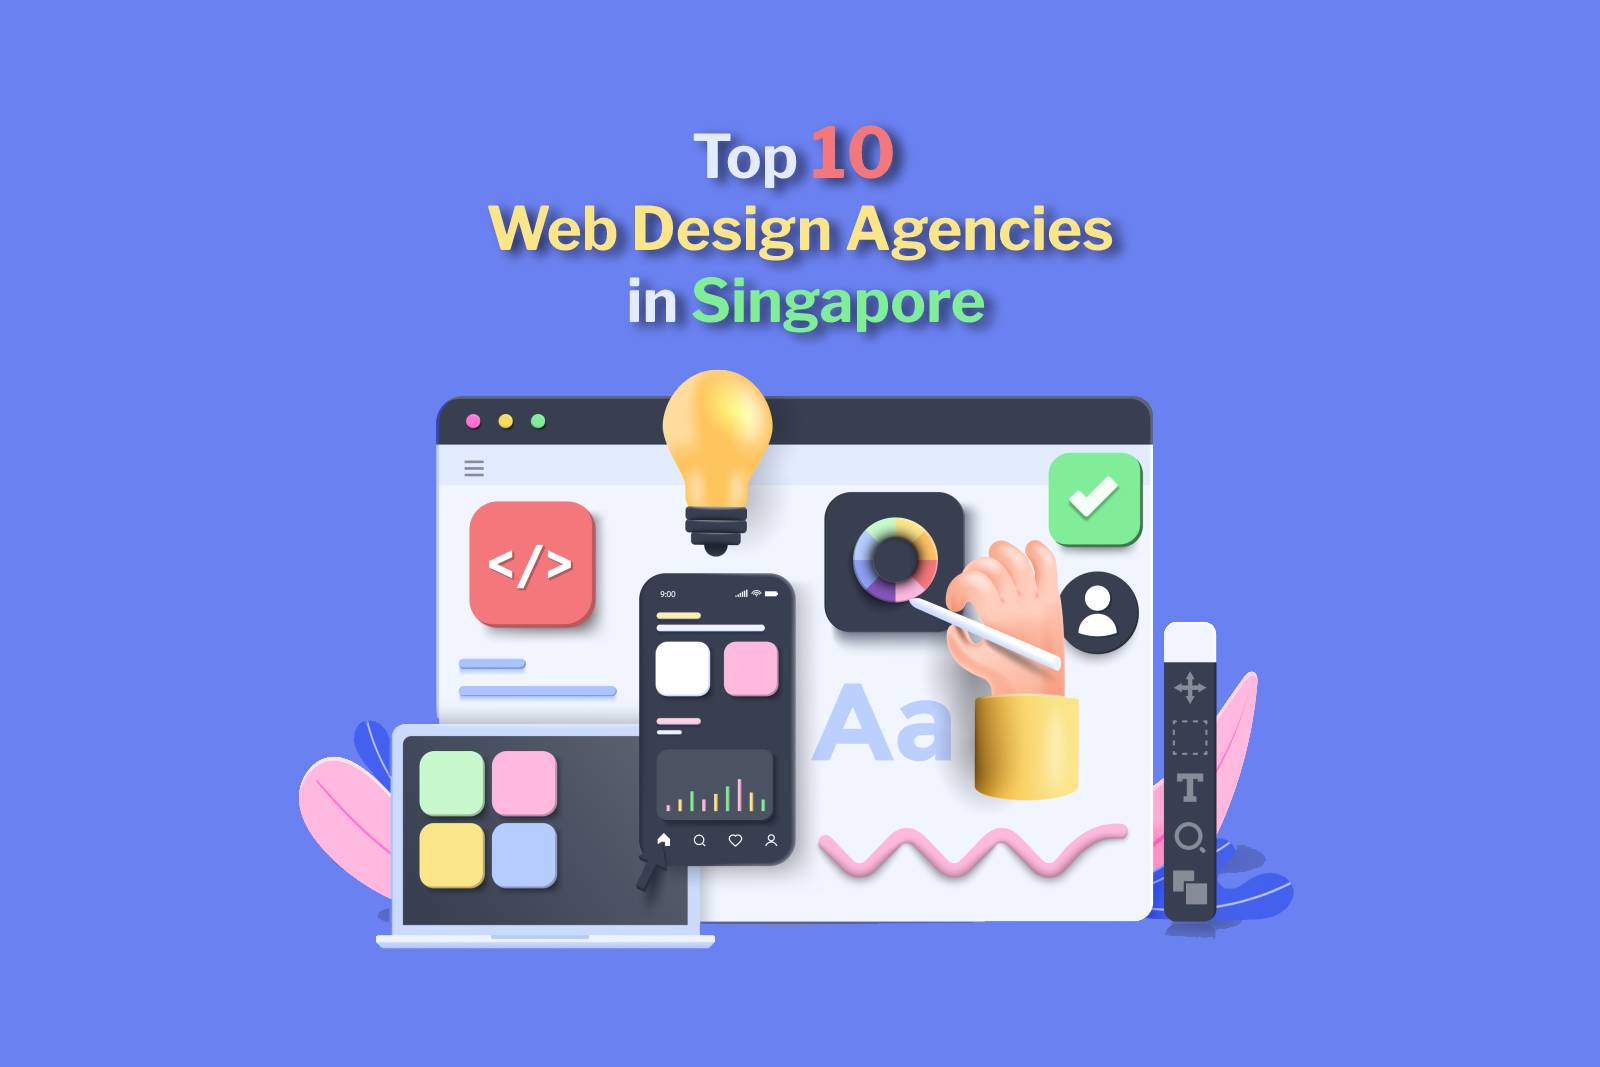 Top 10 Web Design Agencies in Singapore